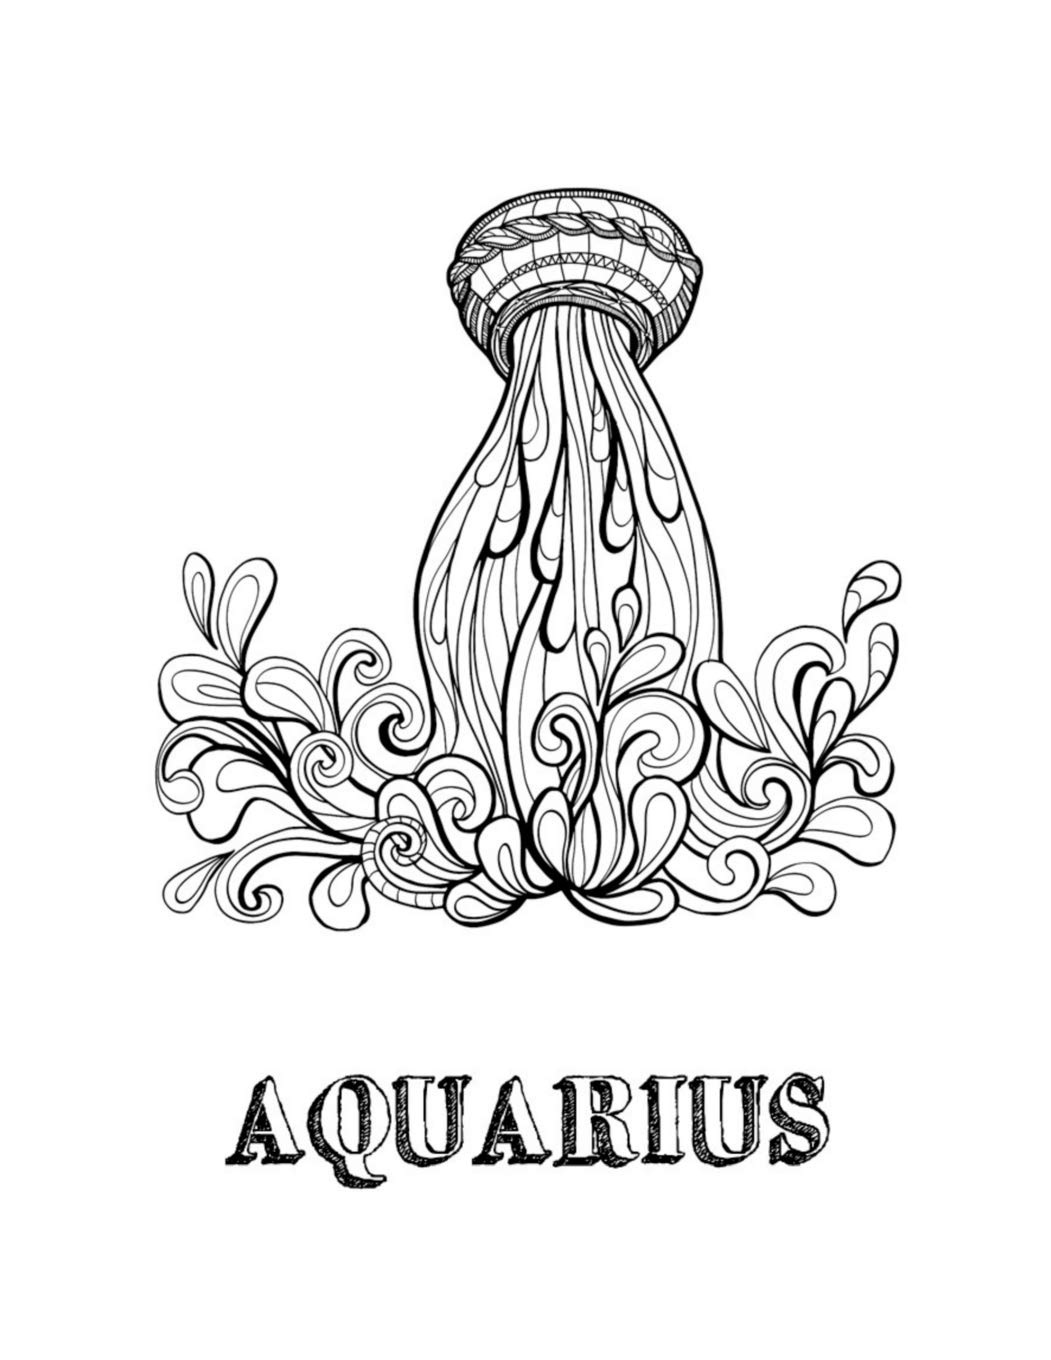 Aquarius Coloring Pages Printable Pdf - Free Aquarius Coloring Pages